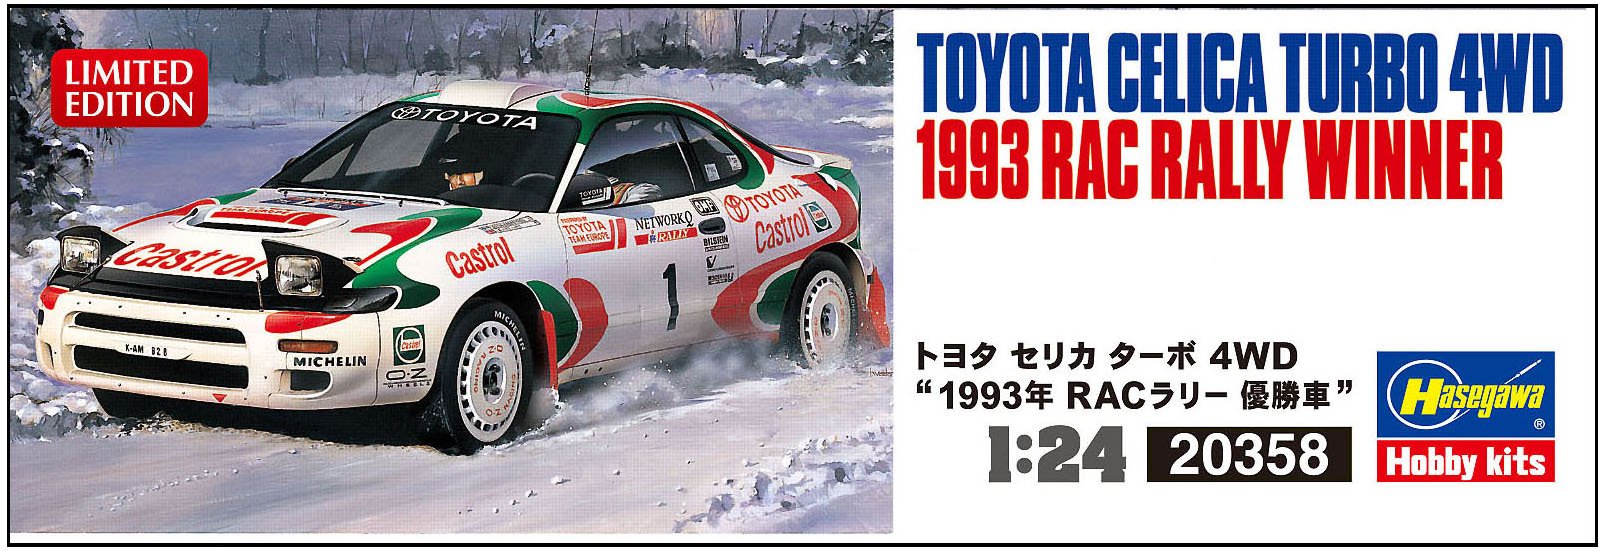 HASEGAWA 20358 Toyota Celica Turbo 4Wd '1993 Rac Rally Winner' 1/24 Scale Kit